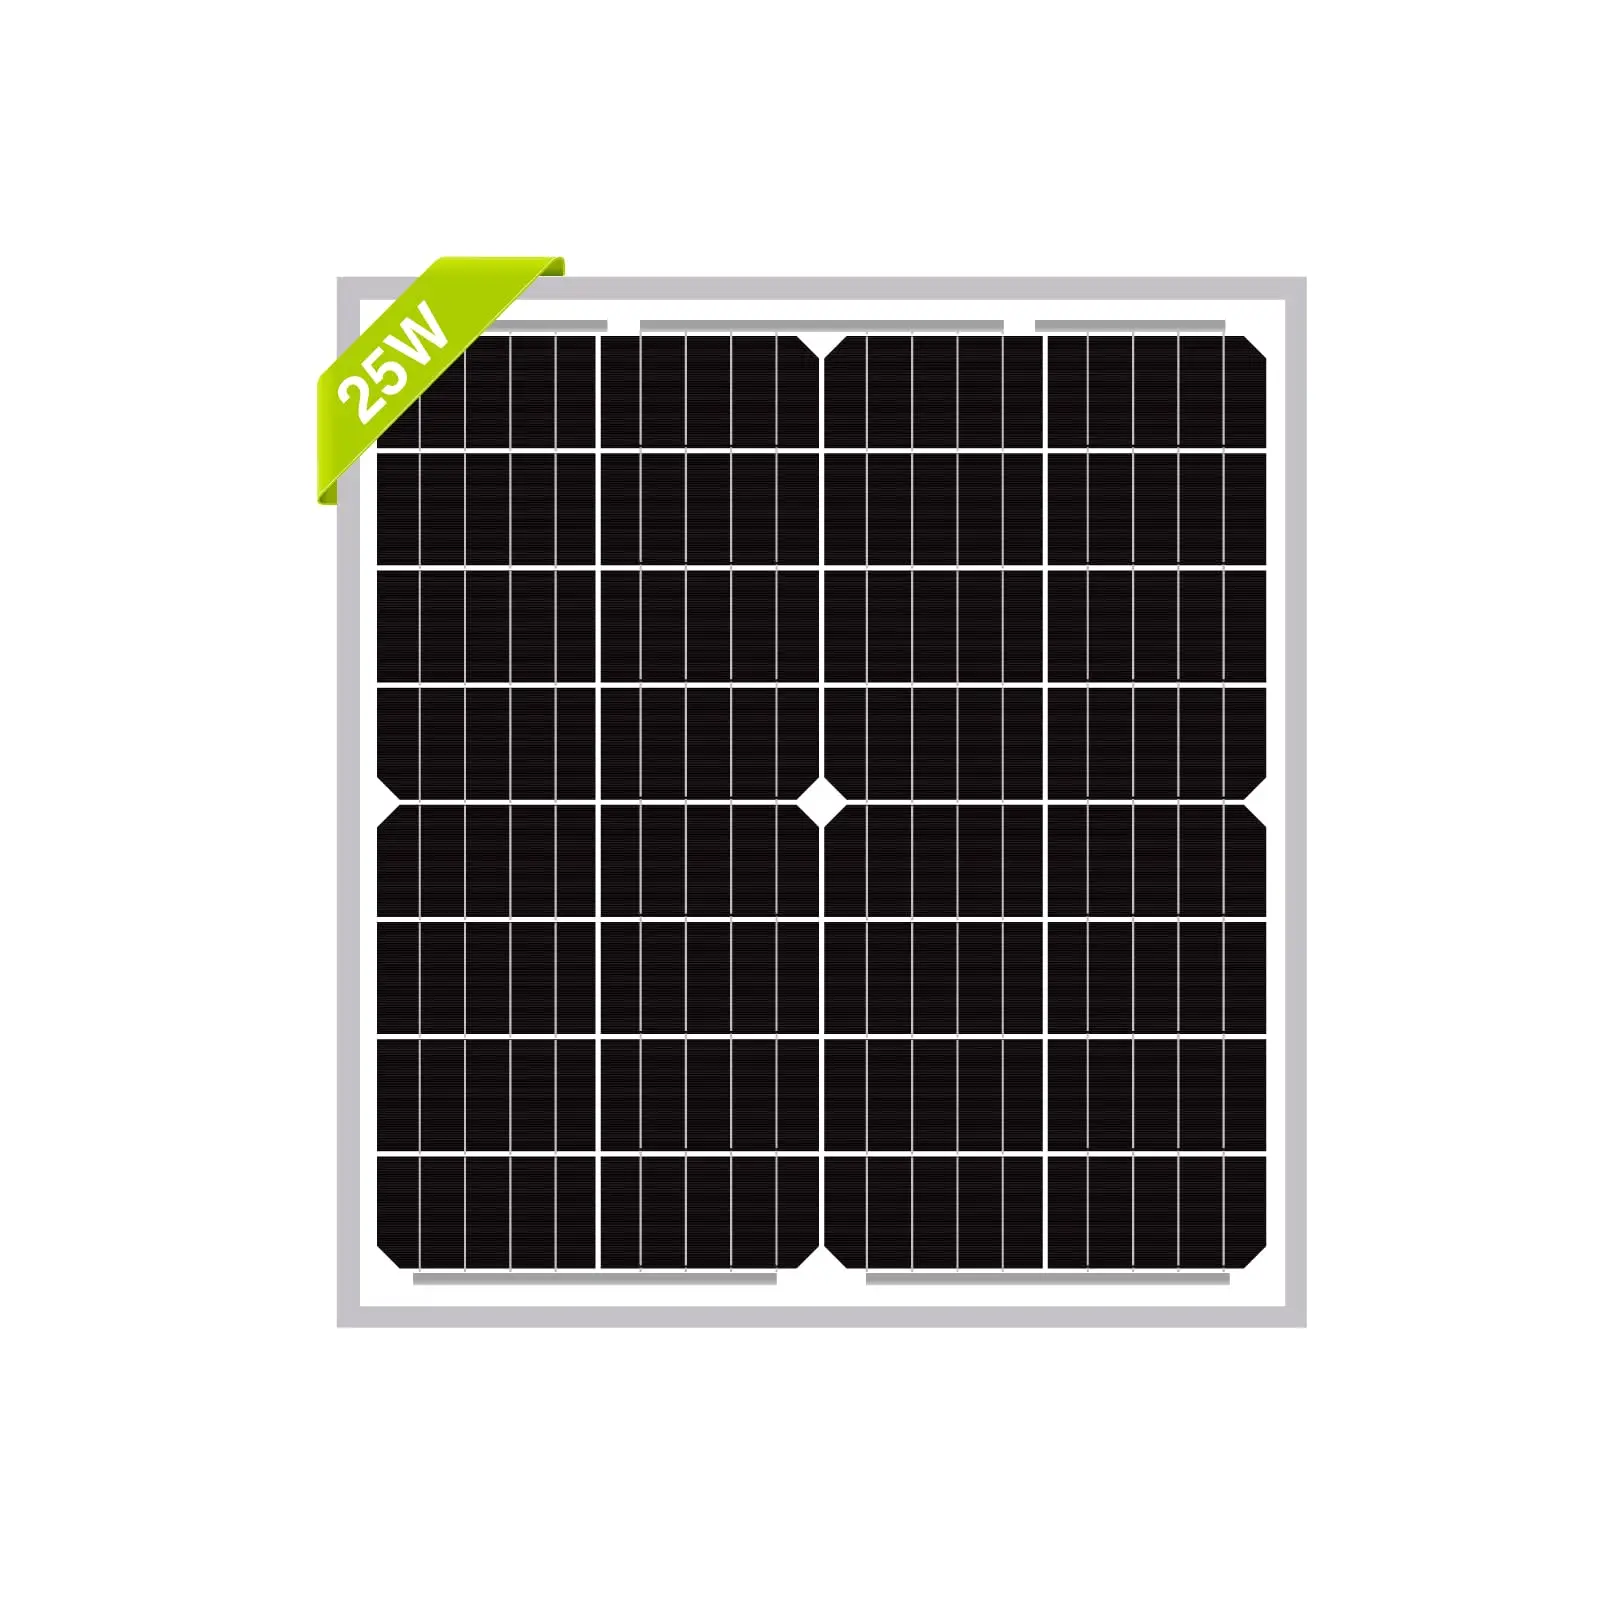 monocrystalline solar panel price - How much does a monocrystalline solar cell cost